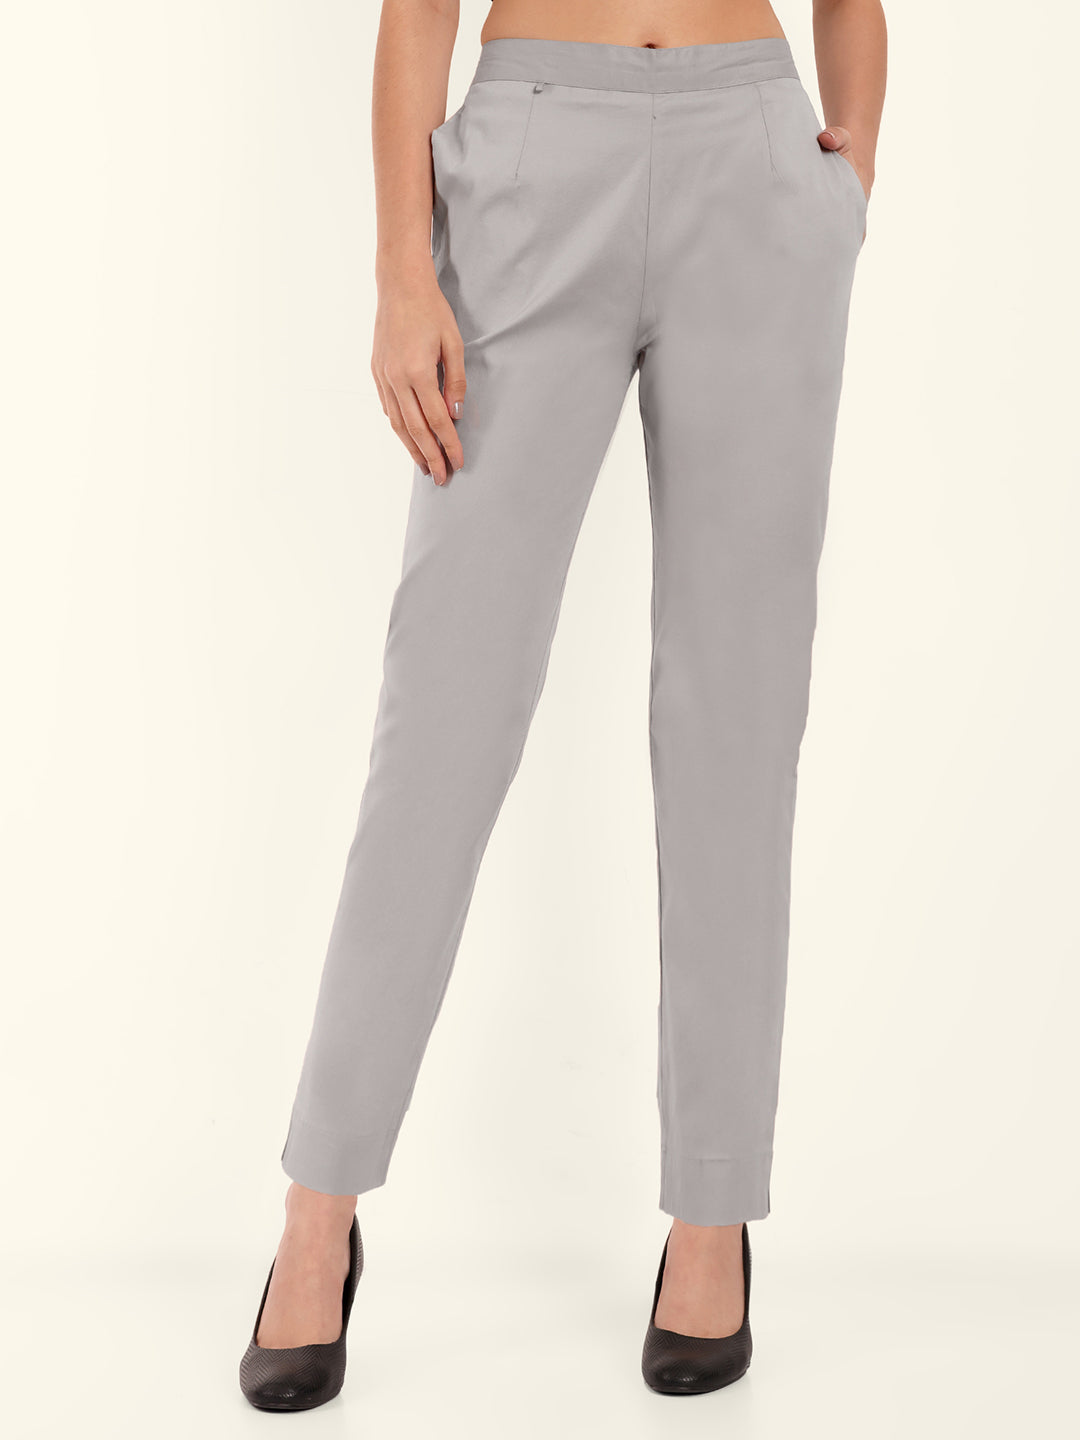 Buy Women Grey Regular Fit Solid Casual Trousers Online  739142  Allen  Solly